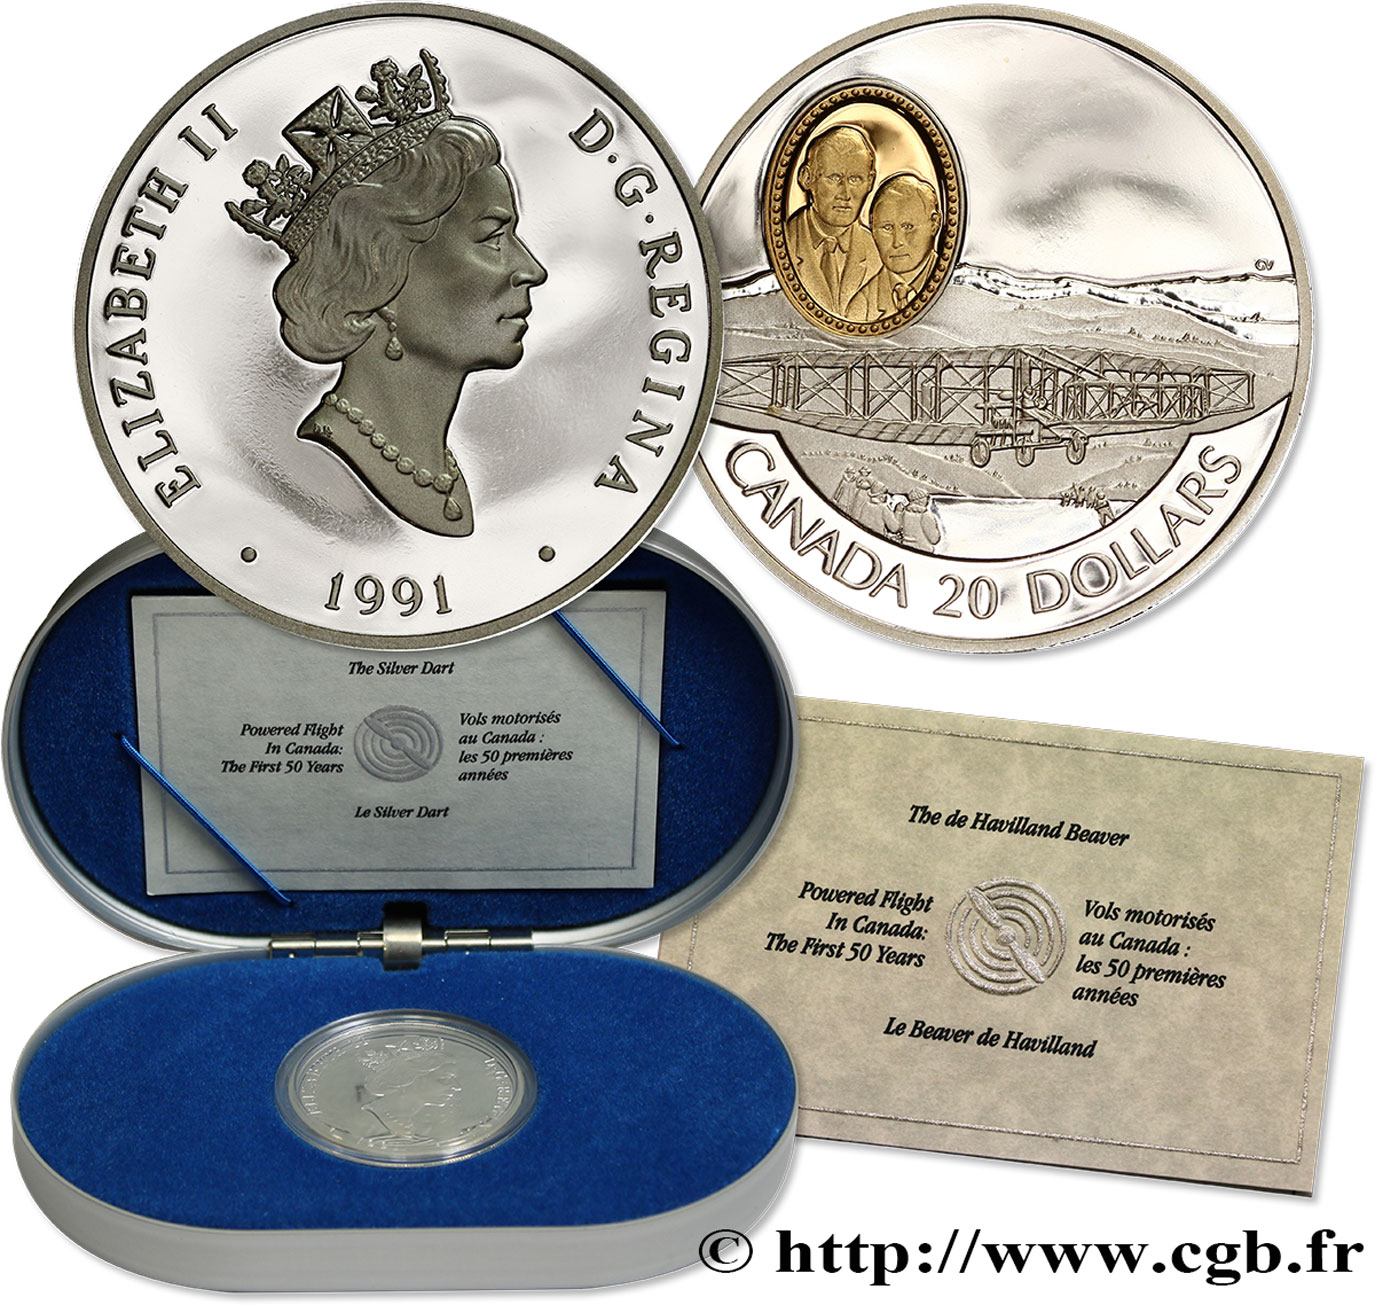 CANADA 20 Dollars proof Elisabeth II / Avion Silver Dart  1991  MS 